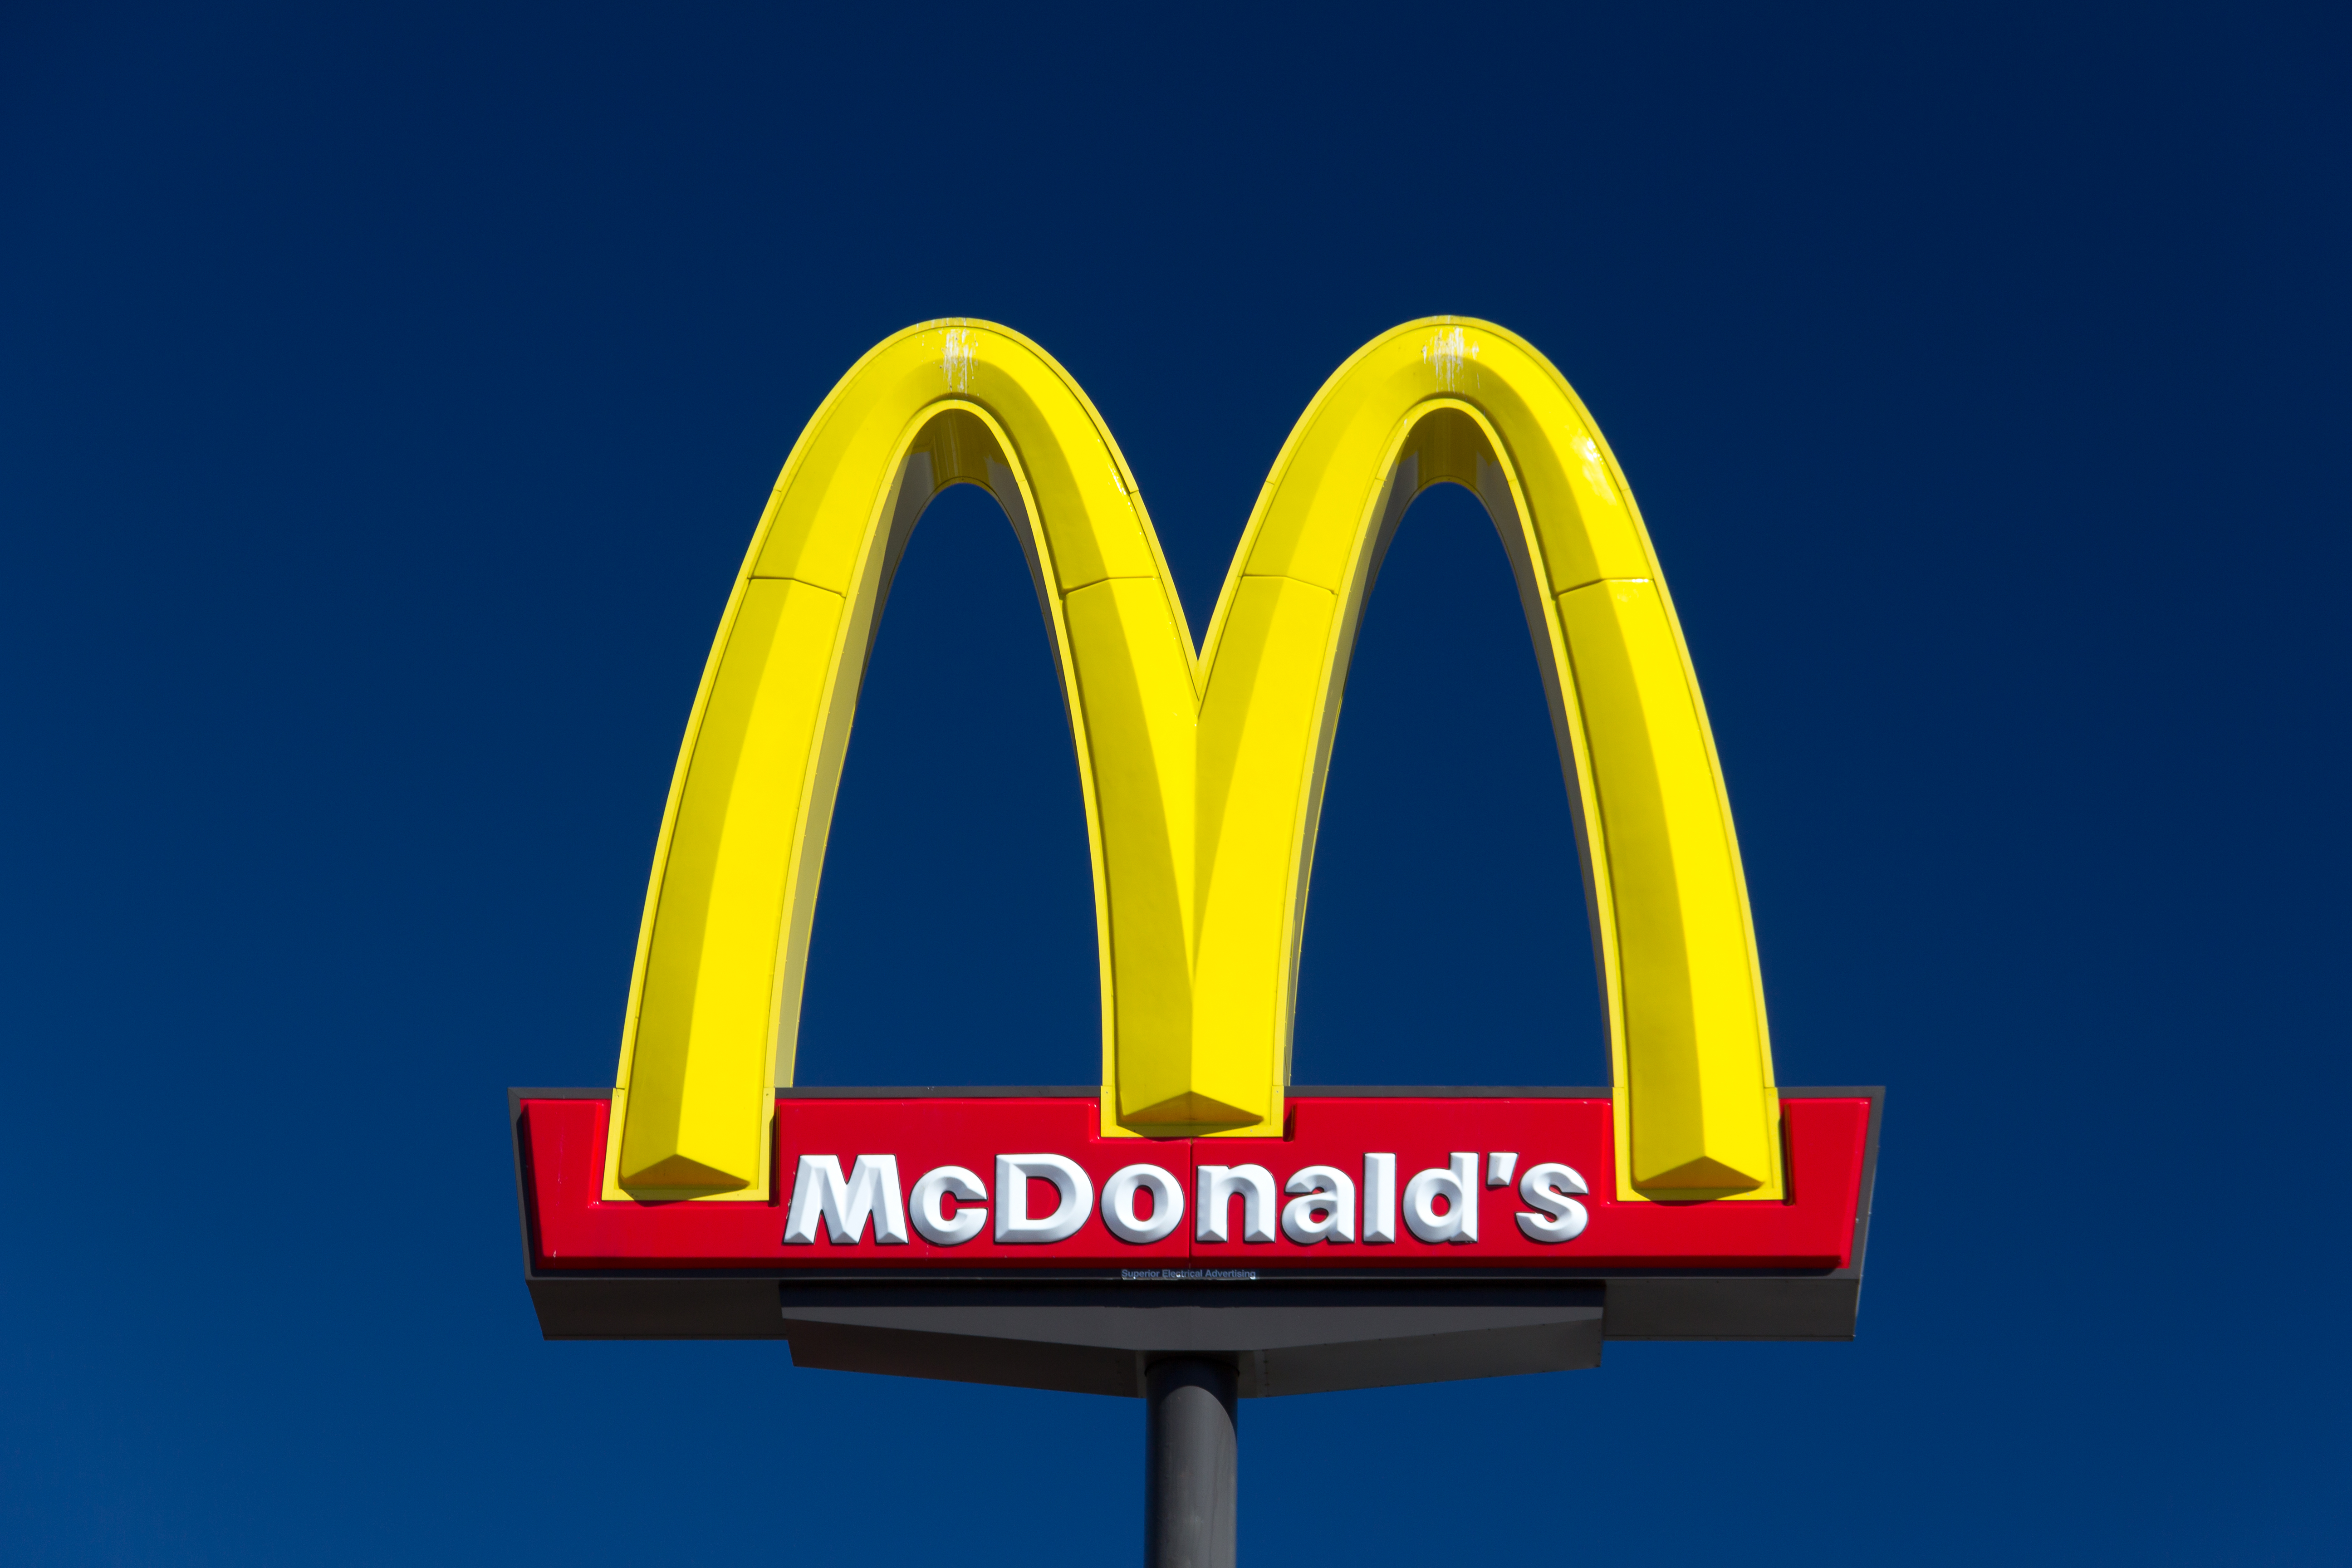 A McDonald’s restaurant sign on a blue sky background.